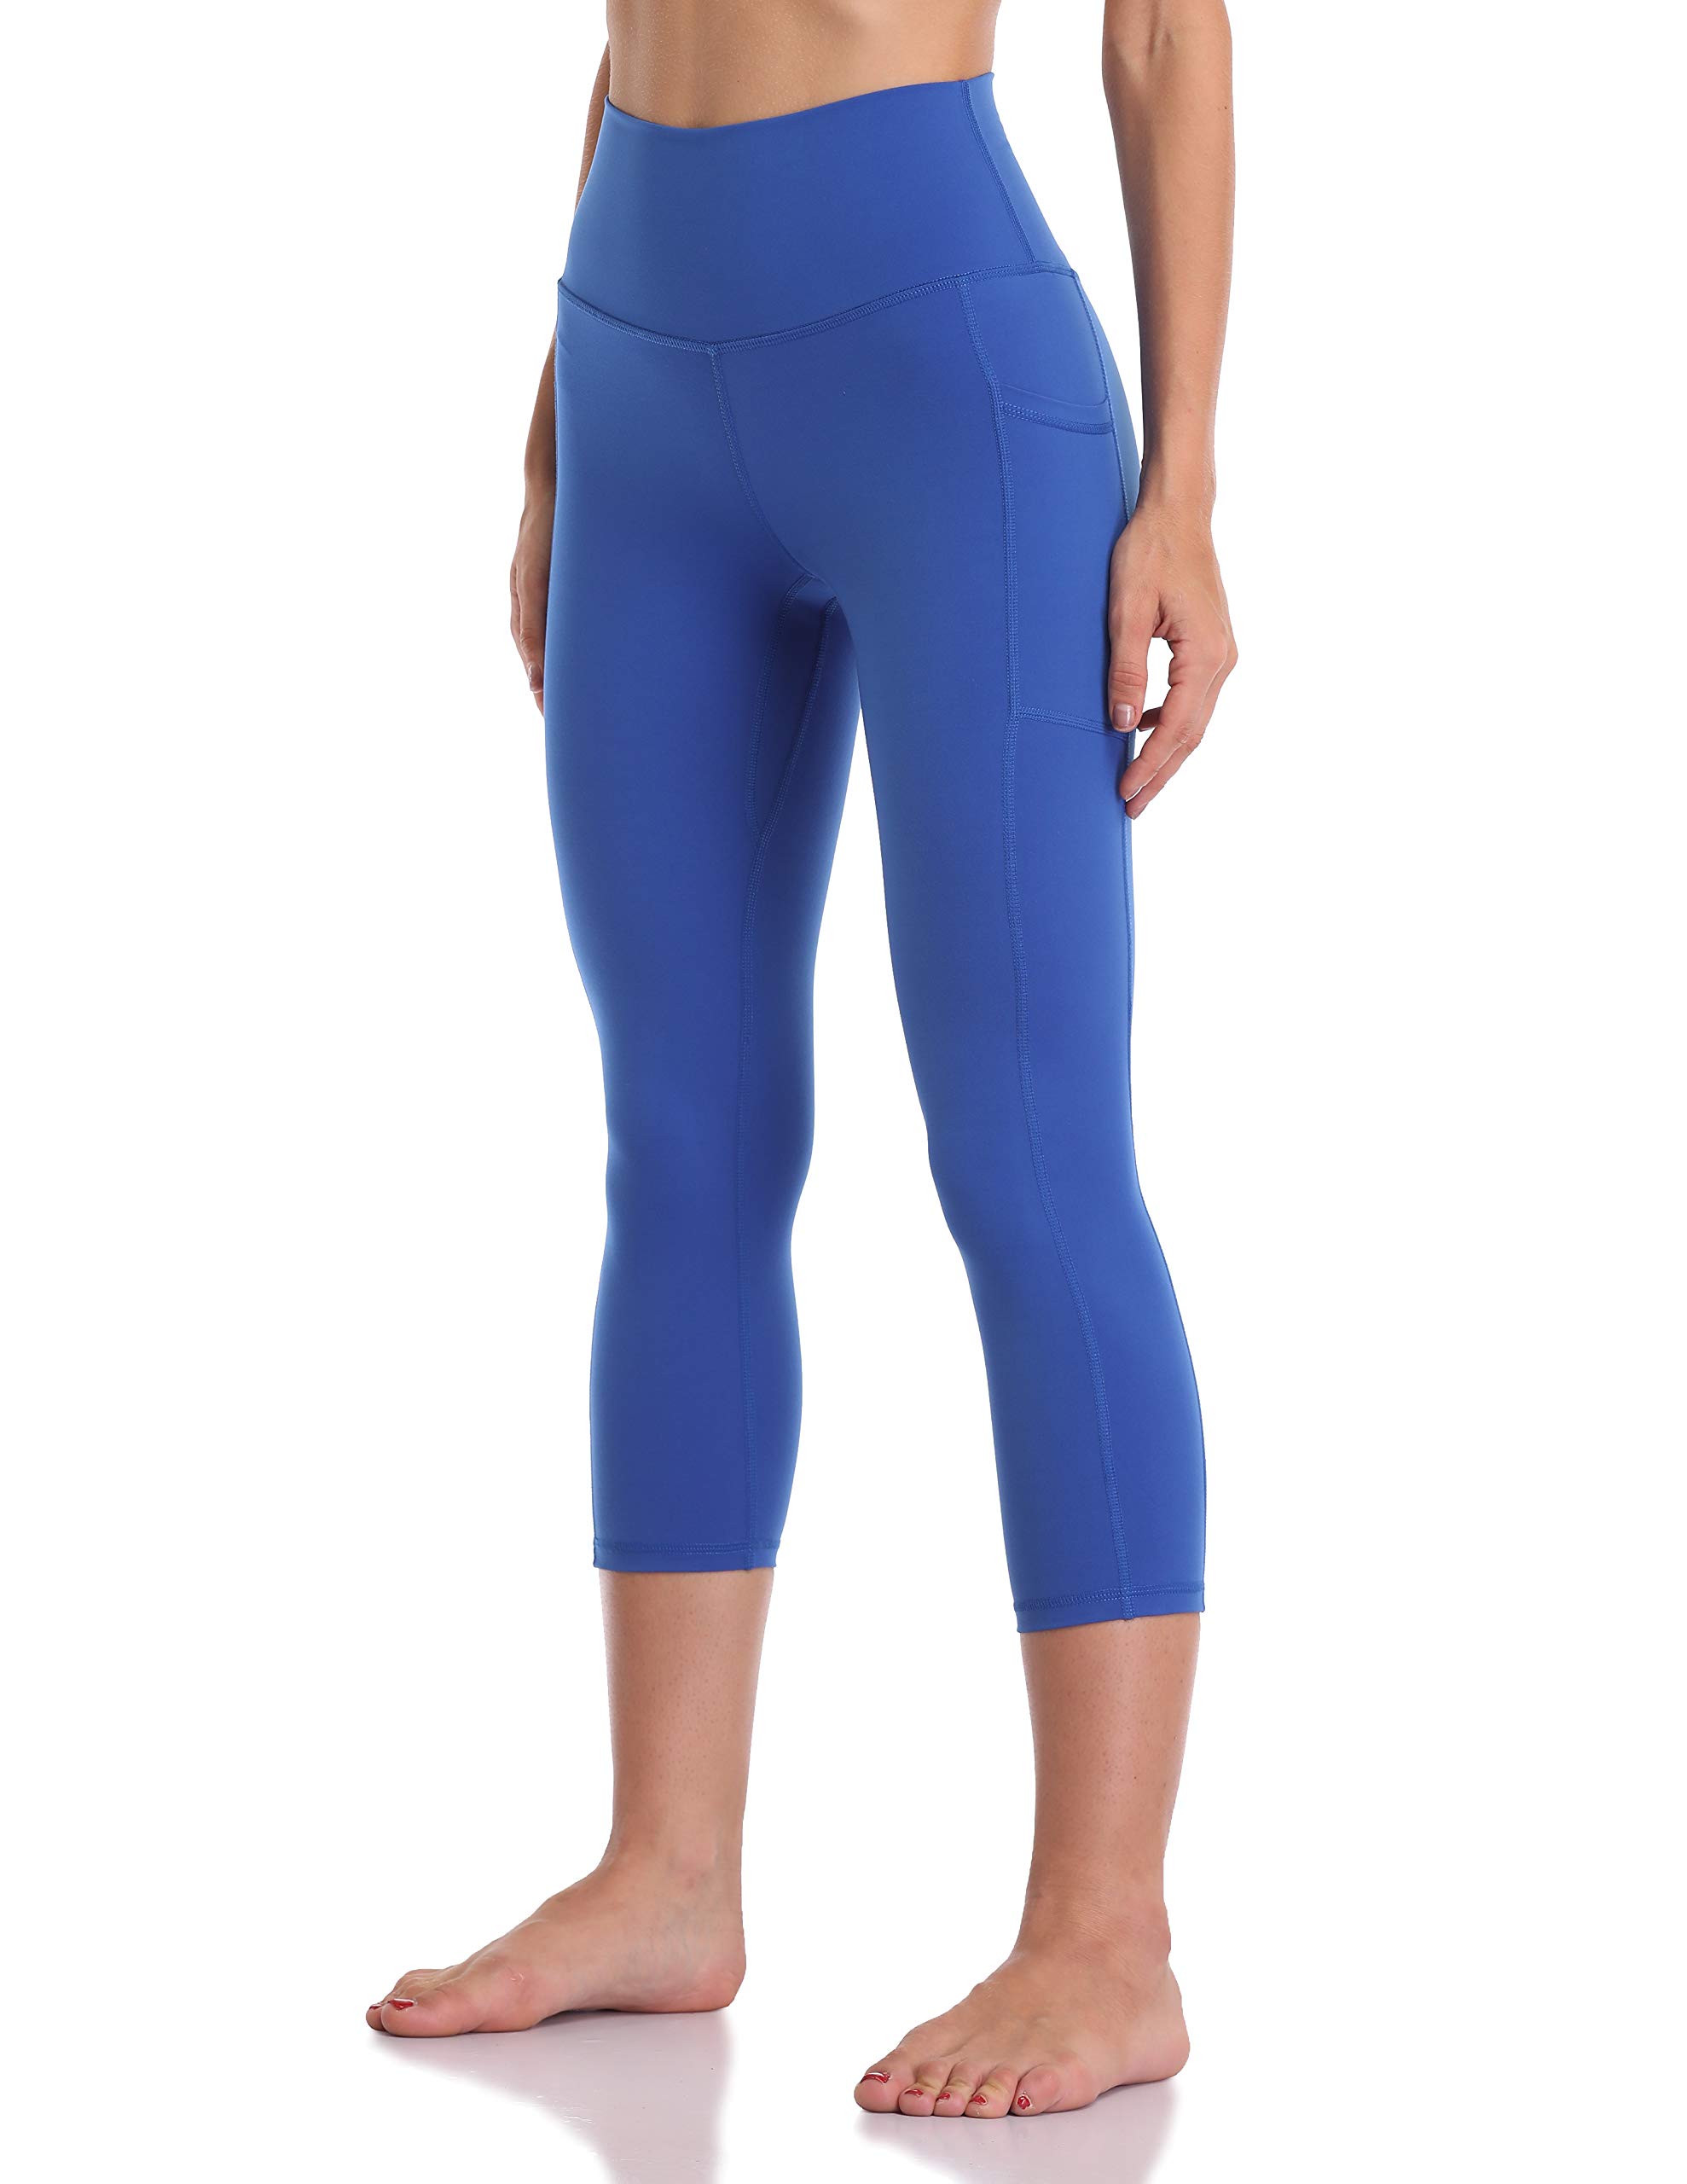 Colorfulkoala colorfulkoala Womens High Waisted Yoga capris 21 Inseam  Leggings with Pockets (S, Sapphire Blue)